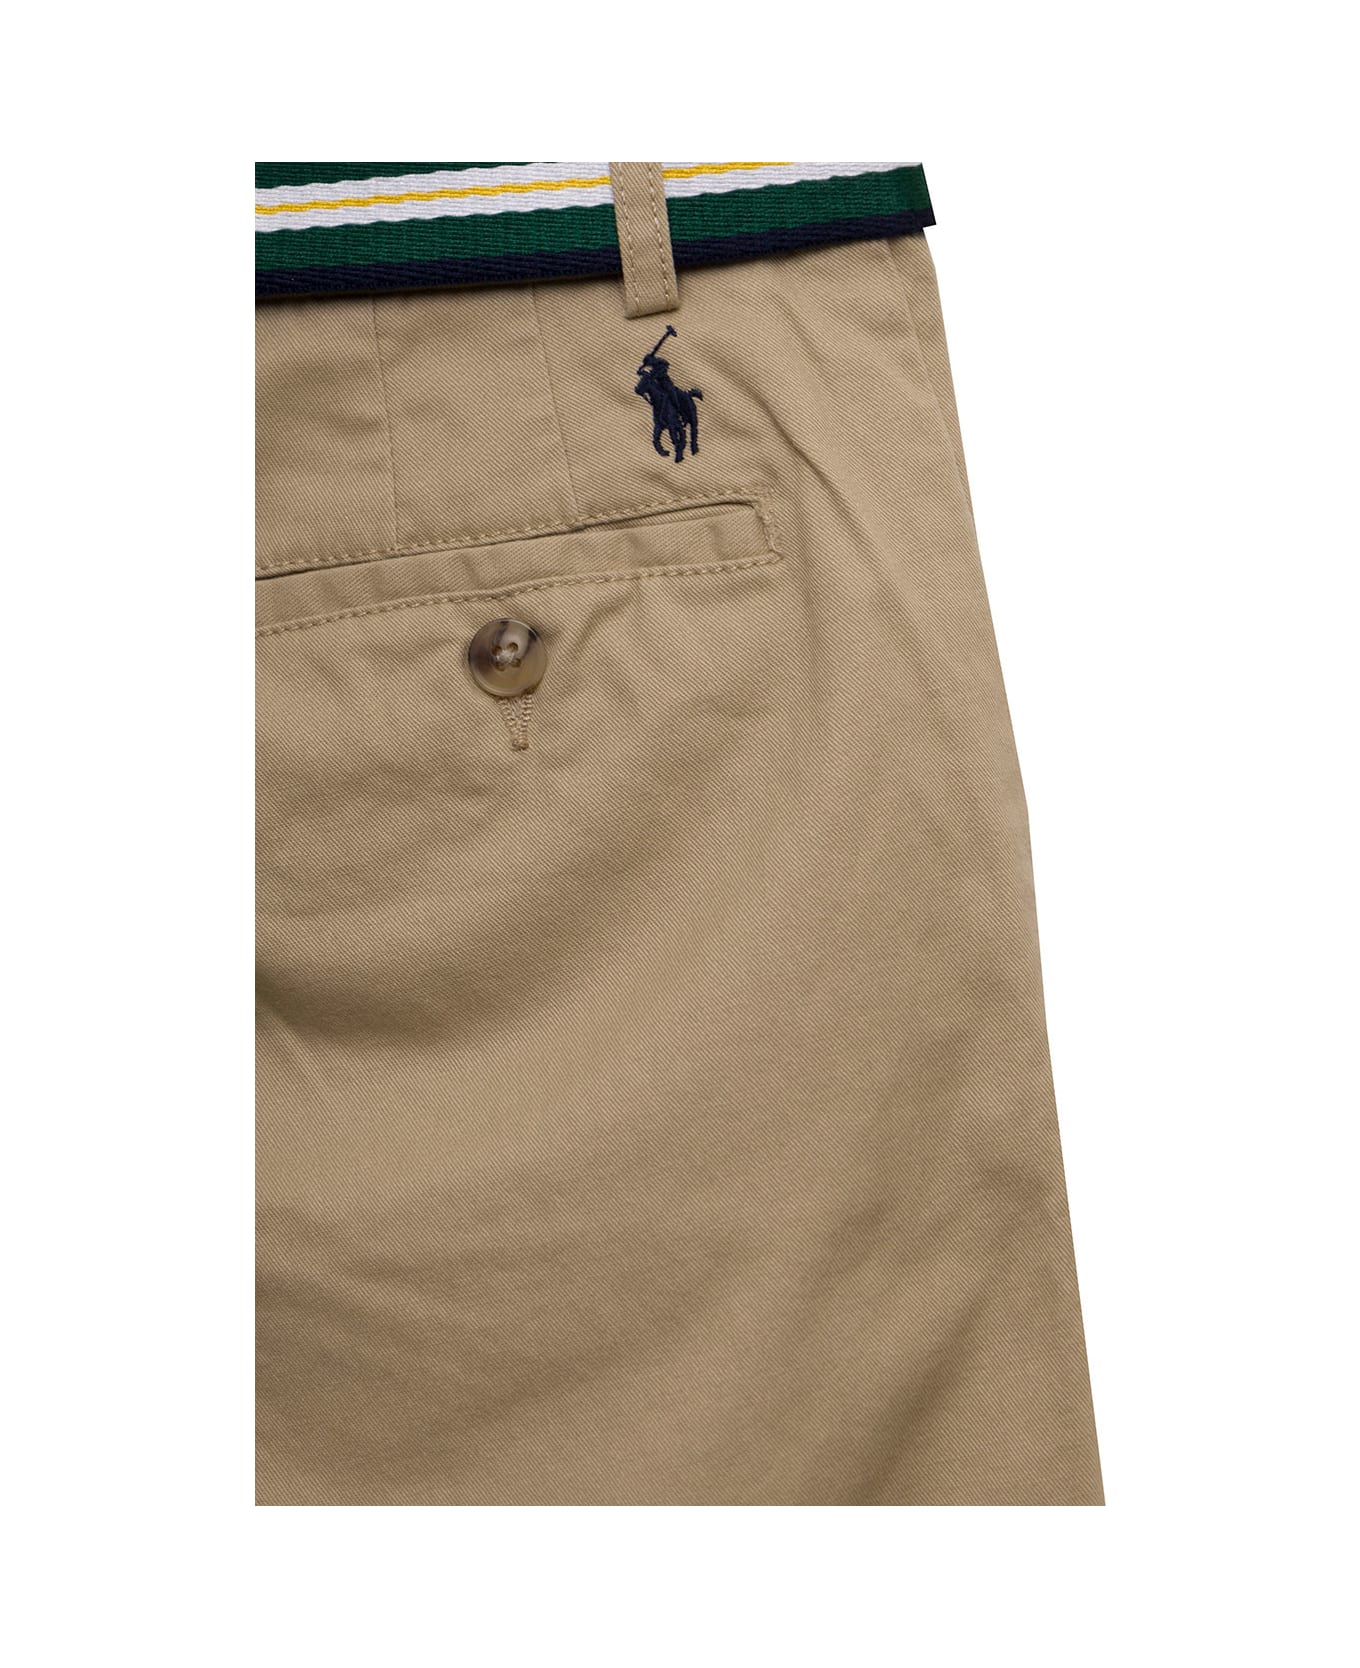 Ralph Lauren Polo Ralph Lauren Kids Boy's Beige Cotton Shorts With Belt - Beige/Khaki